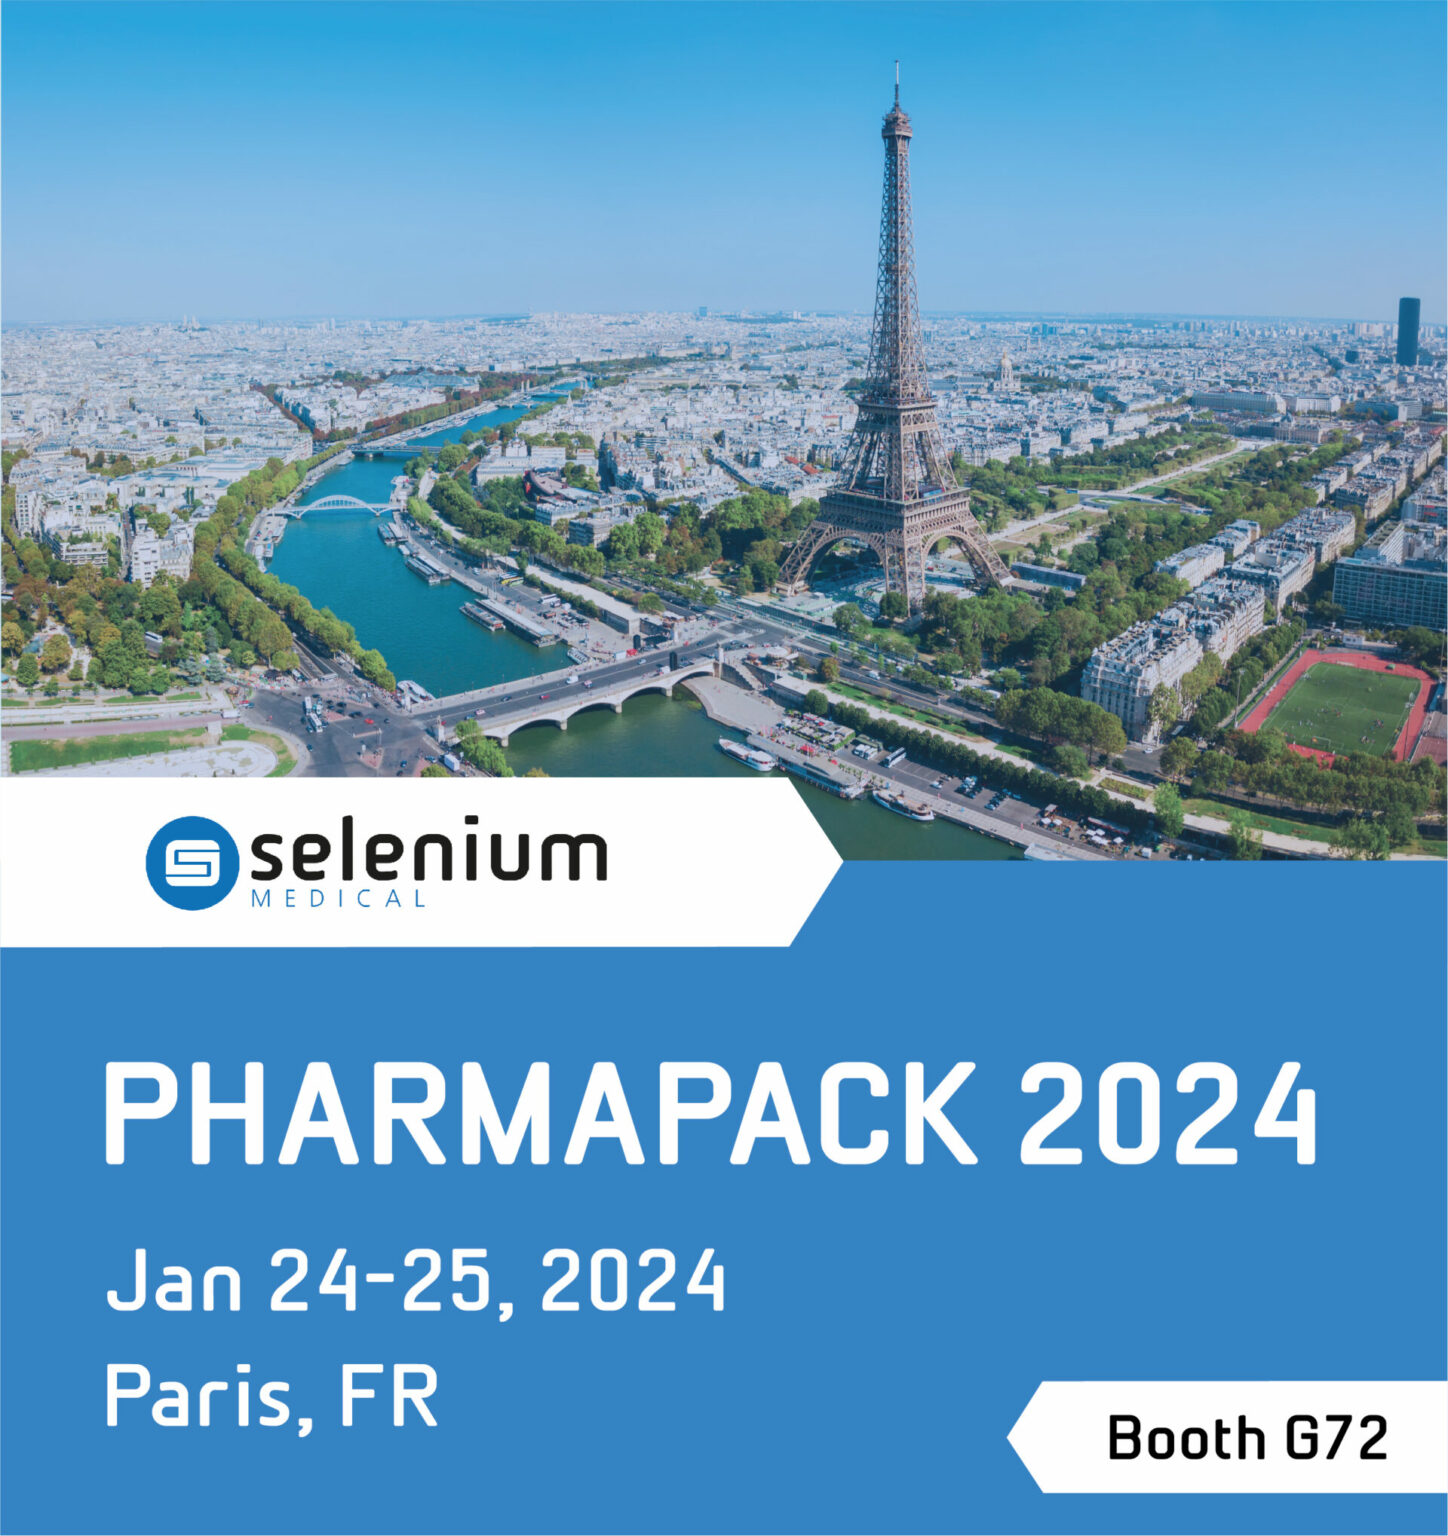 Selenium Medical at Pharmapack 2024 exhibition